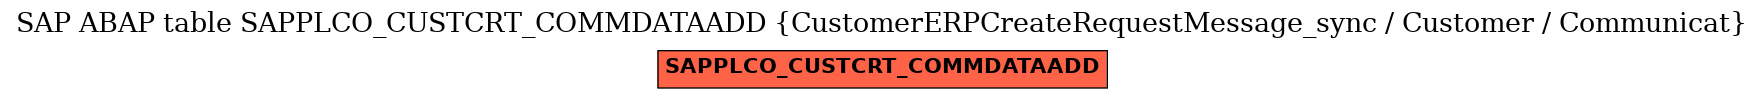 E-R Diagram for table SAPPLCO_CUSTCRT_COMMDATAADD (CustomerERPCreateRequestMessage_sync / Customer / Communicat)